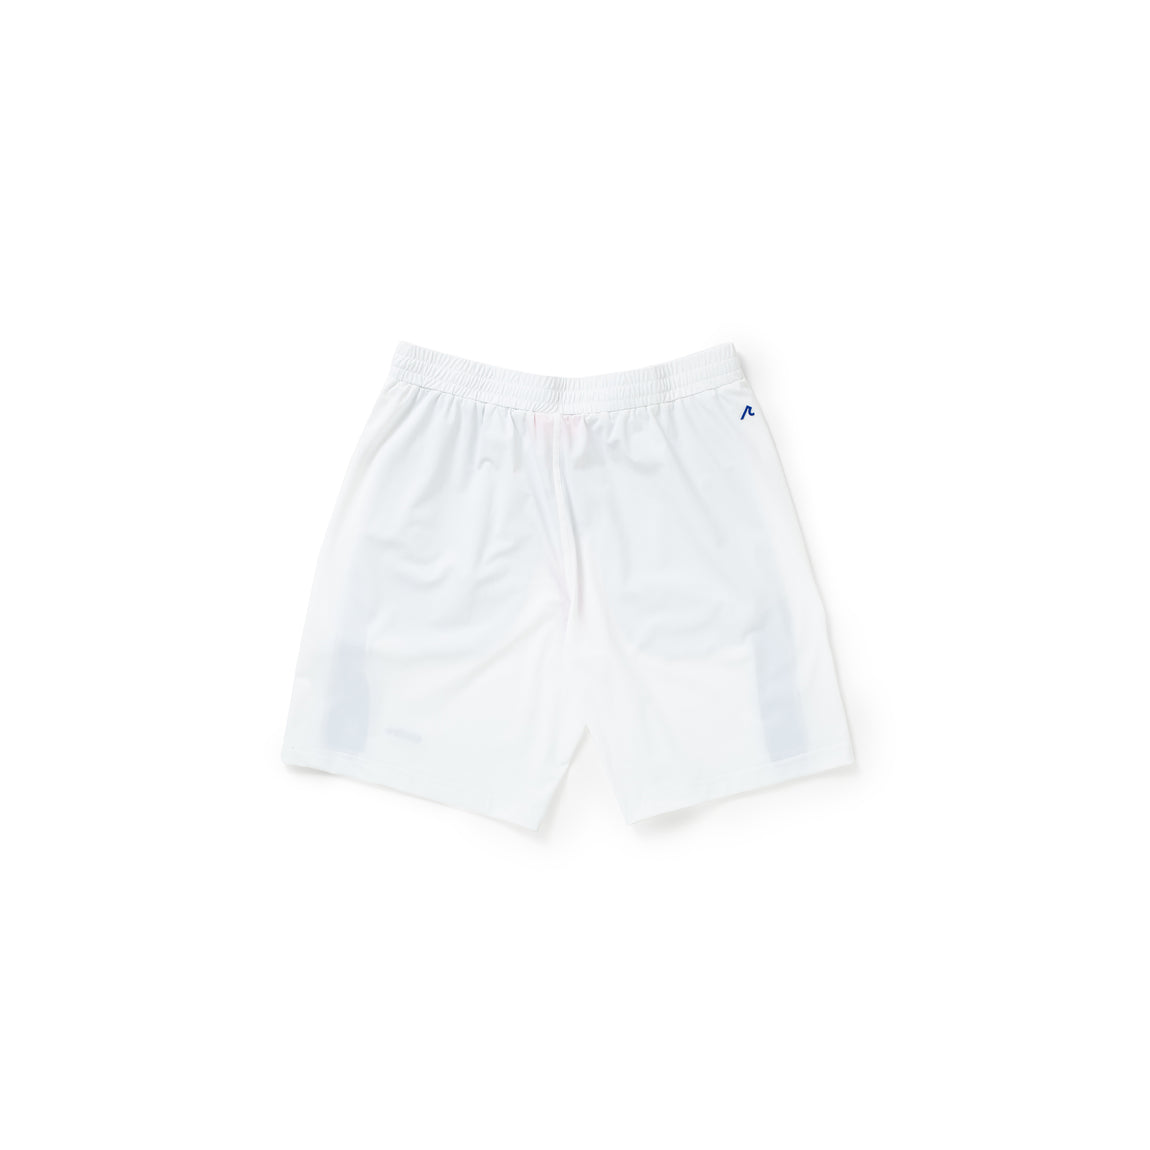 Centre X REDVANLY Parnell Tennis Short (Bright White) - Centre X REDVANLY Parnell Tennis Short (Bright White) - 